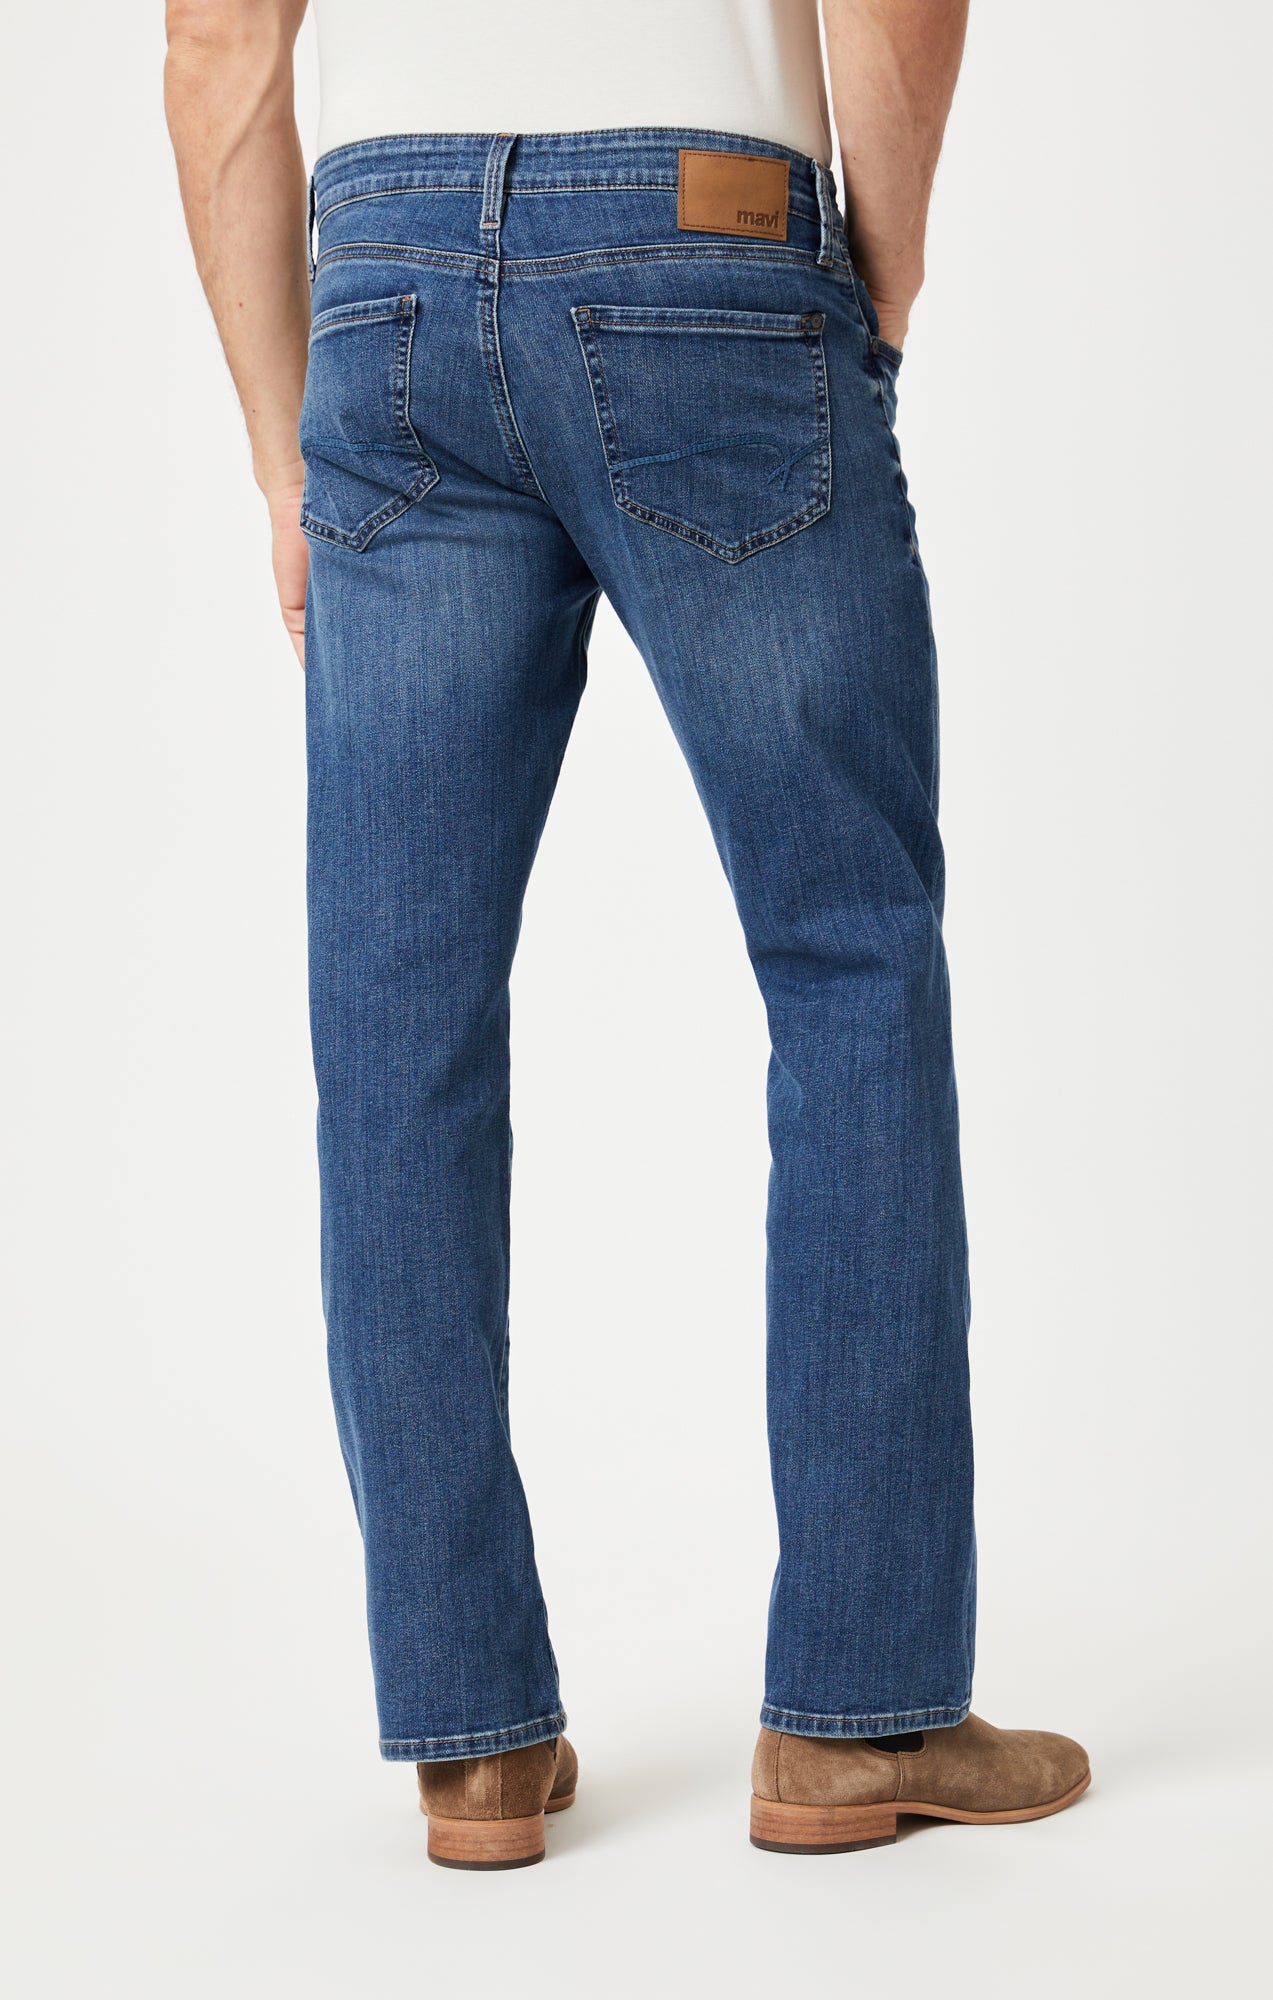 Mavi Jeans Women's Size 30/34 Blue Molly Regular Rise Stretch Bootcut